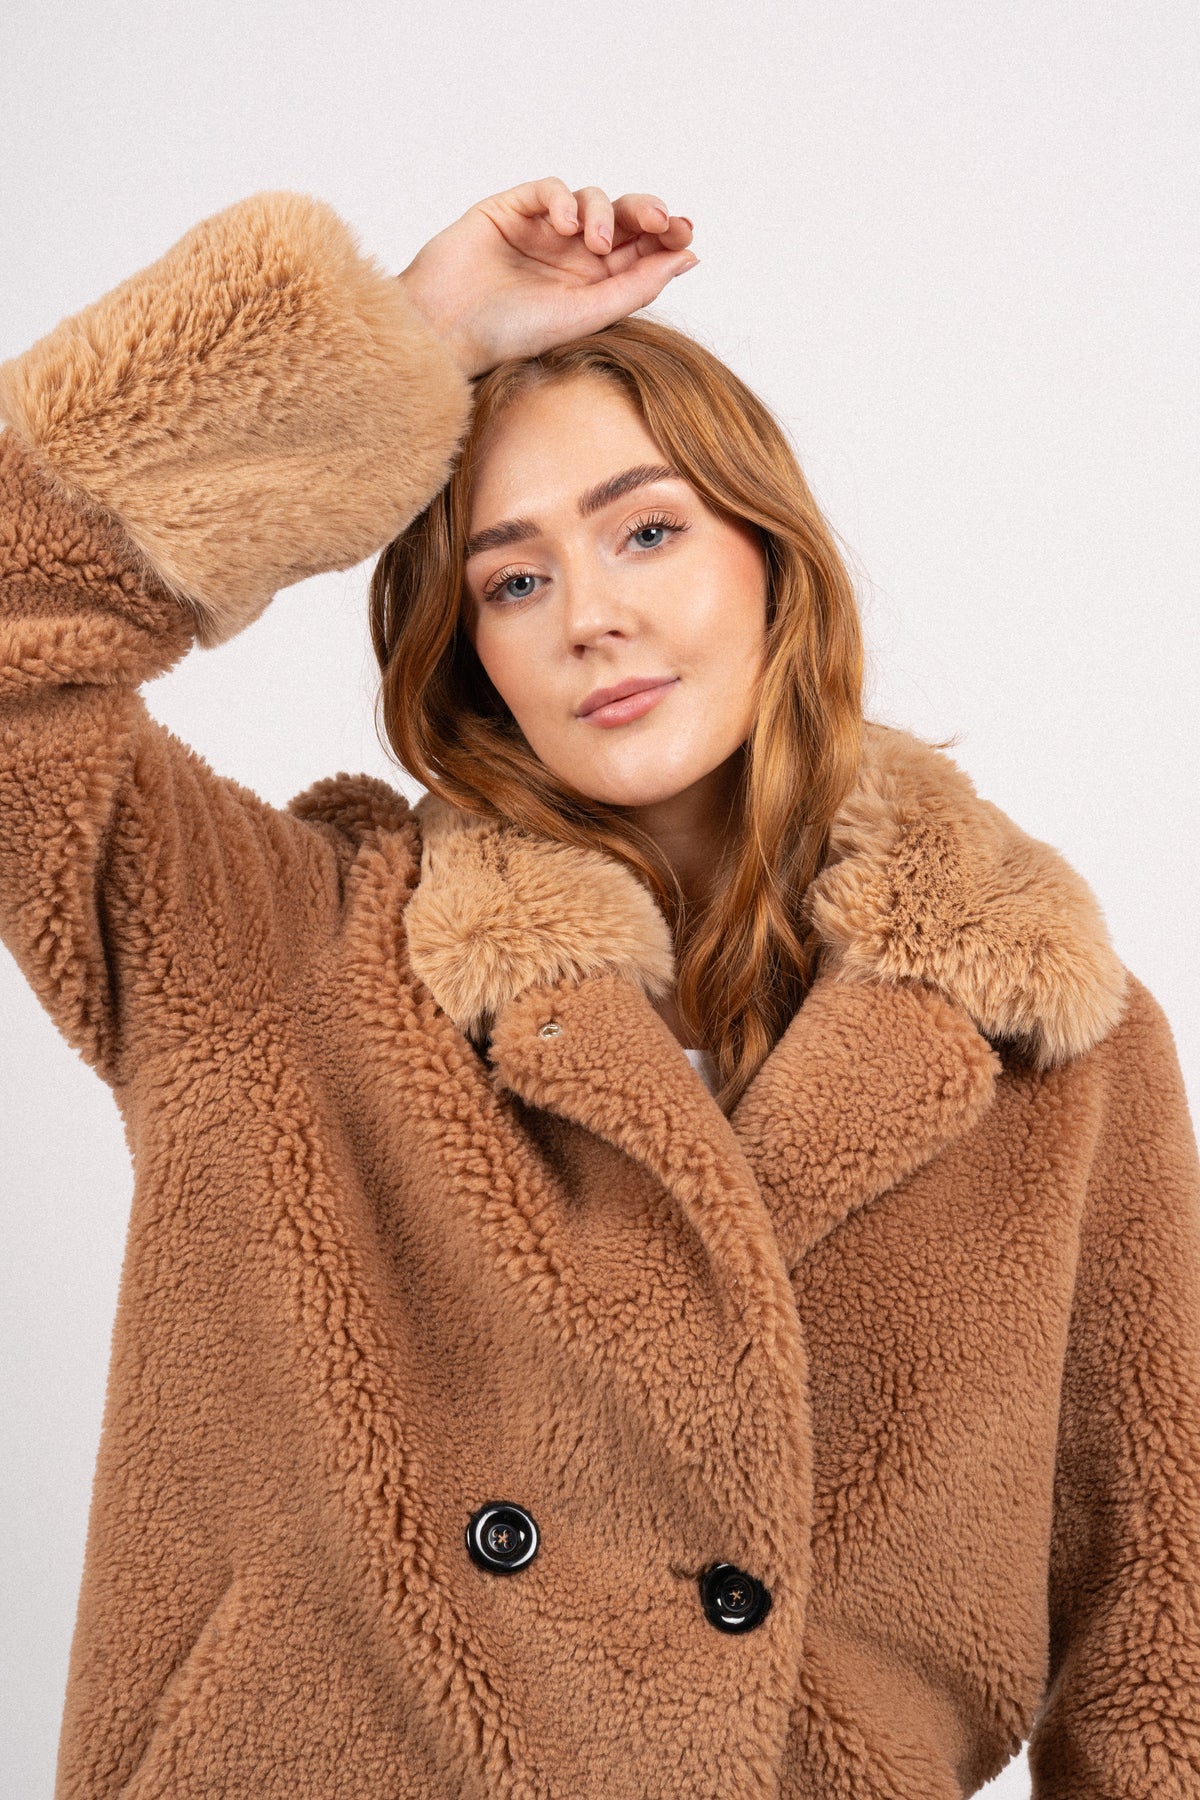 Fiona Wool Coat Short - Light Brown